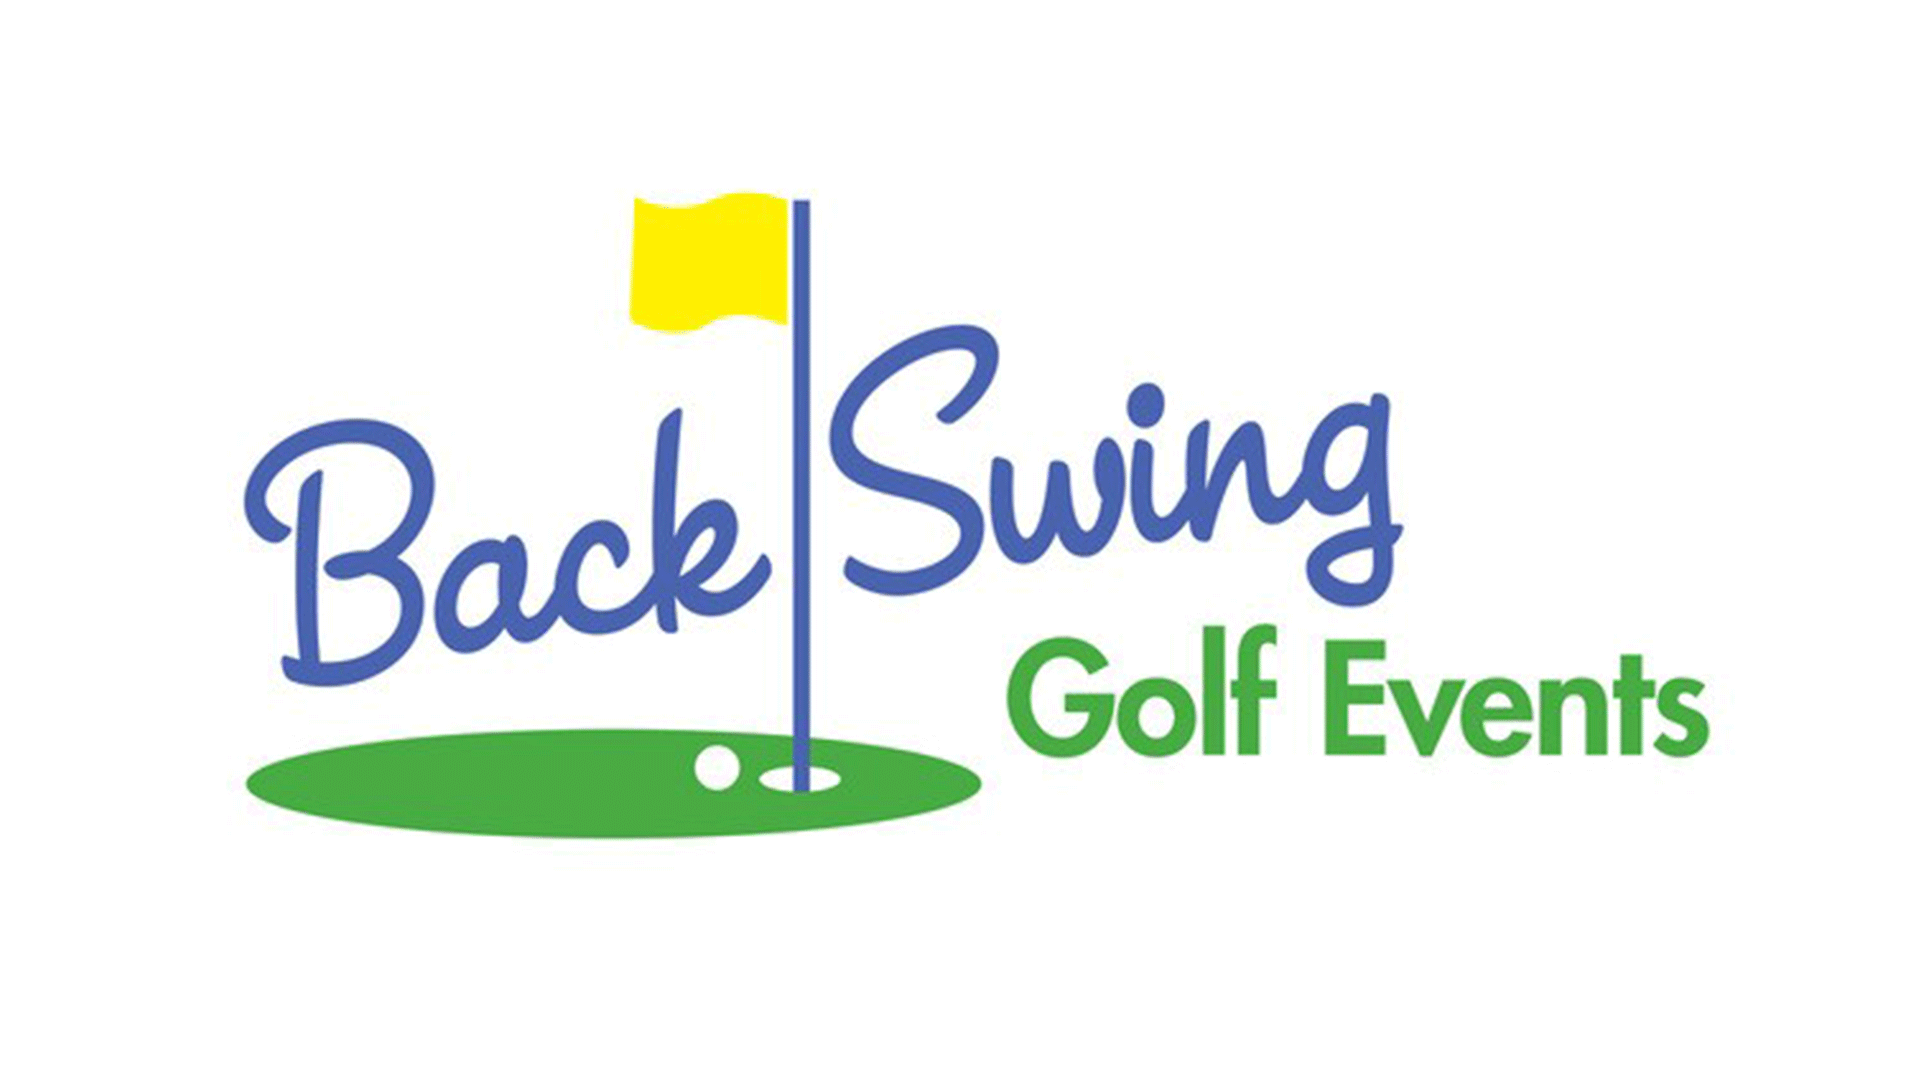 Backswing Golf Events